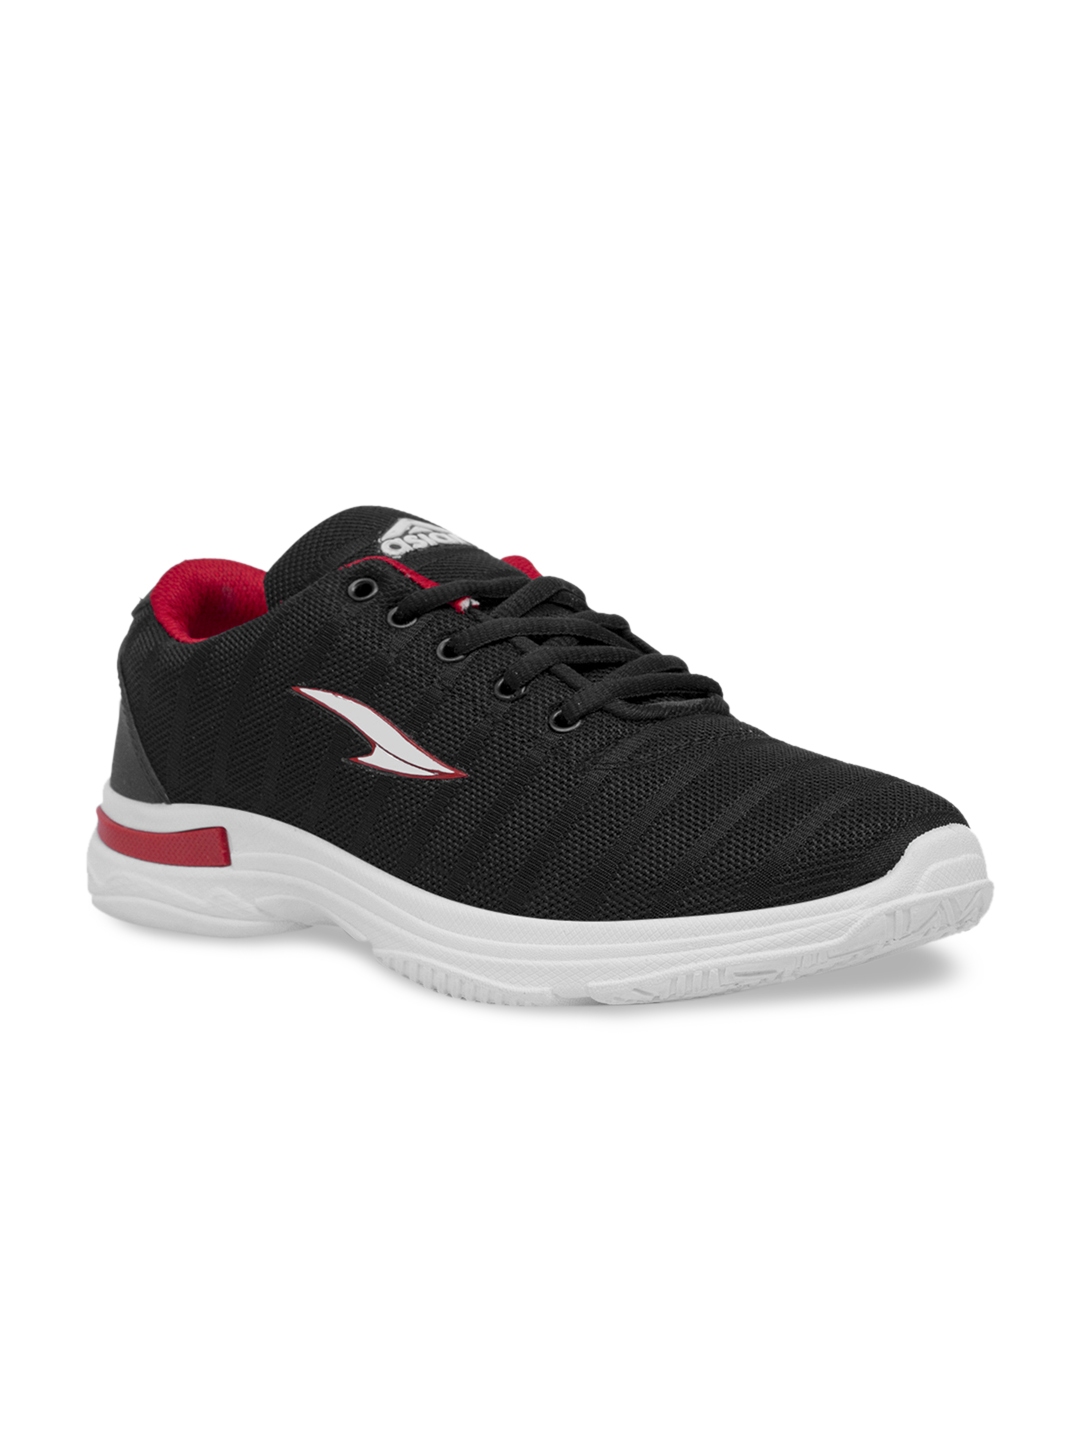 Buy ASIAN Men Black Running Shoes - Sports Shoes for Men 9120177 | Myntra